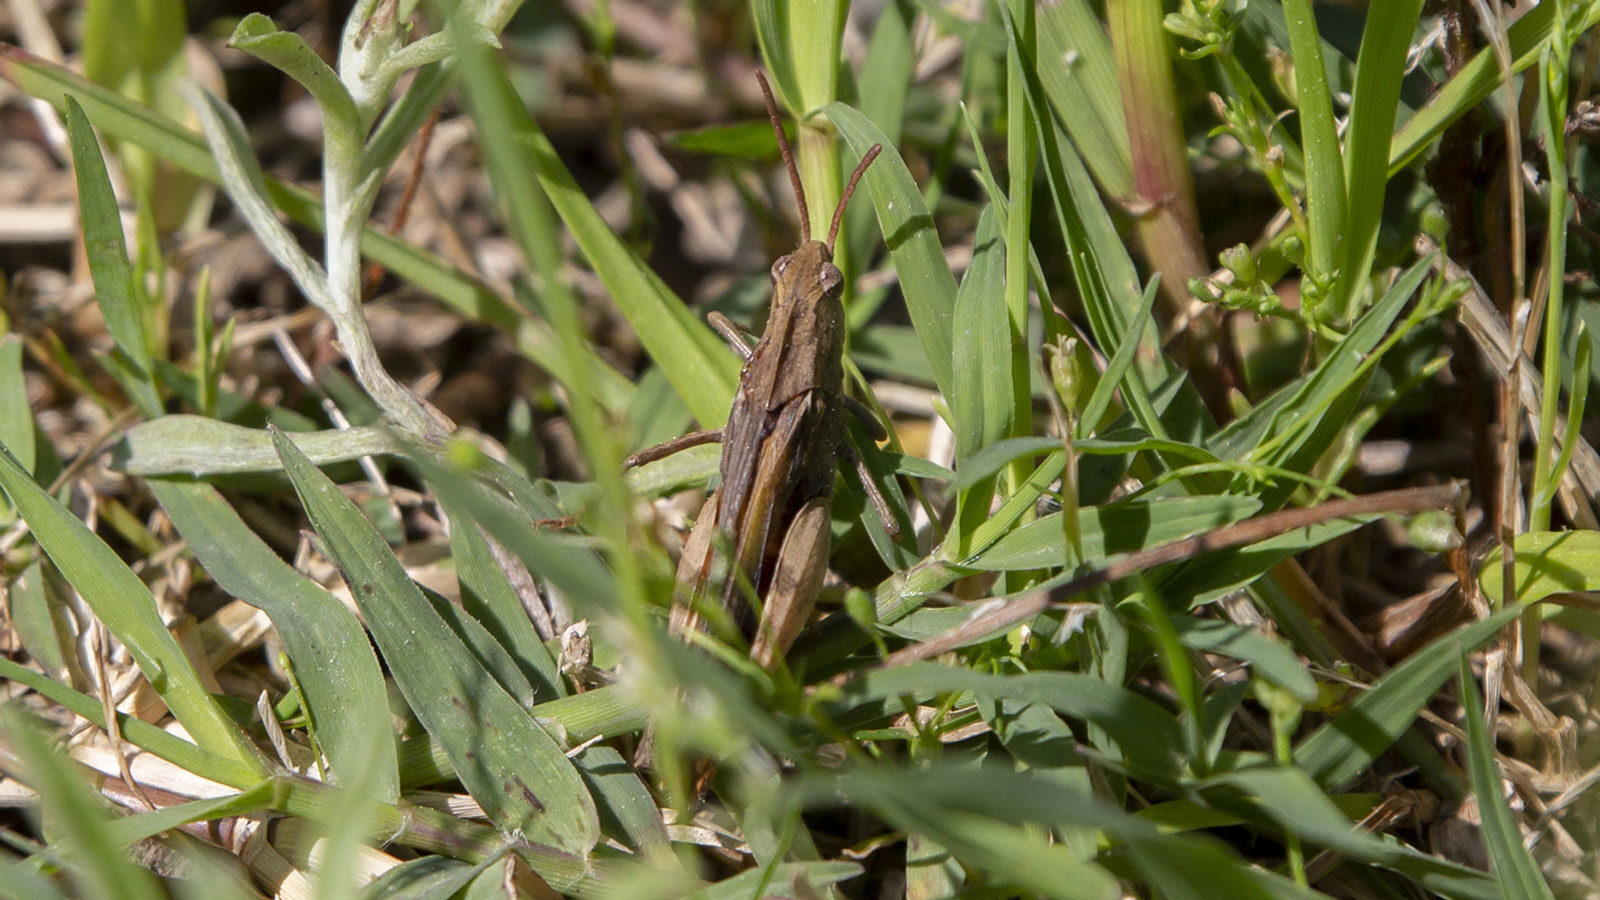 Mischievous bird grasshopper on grass